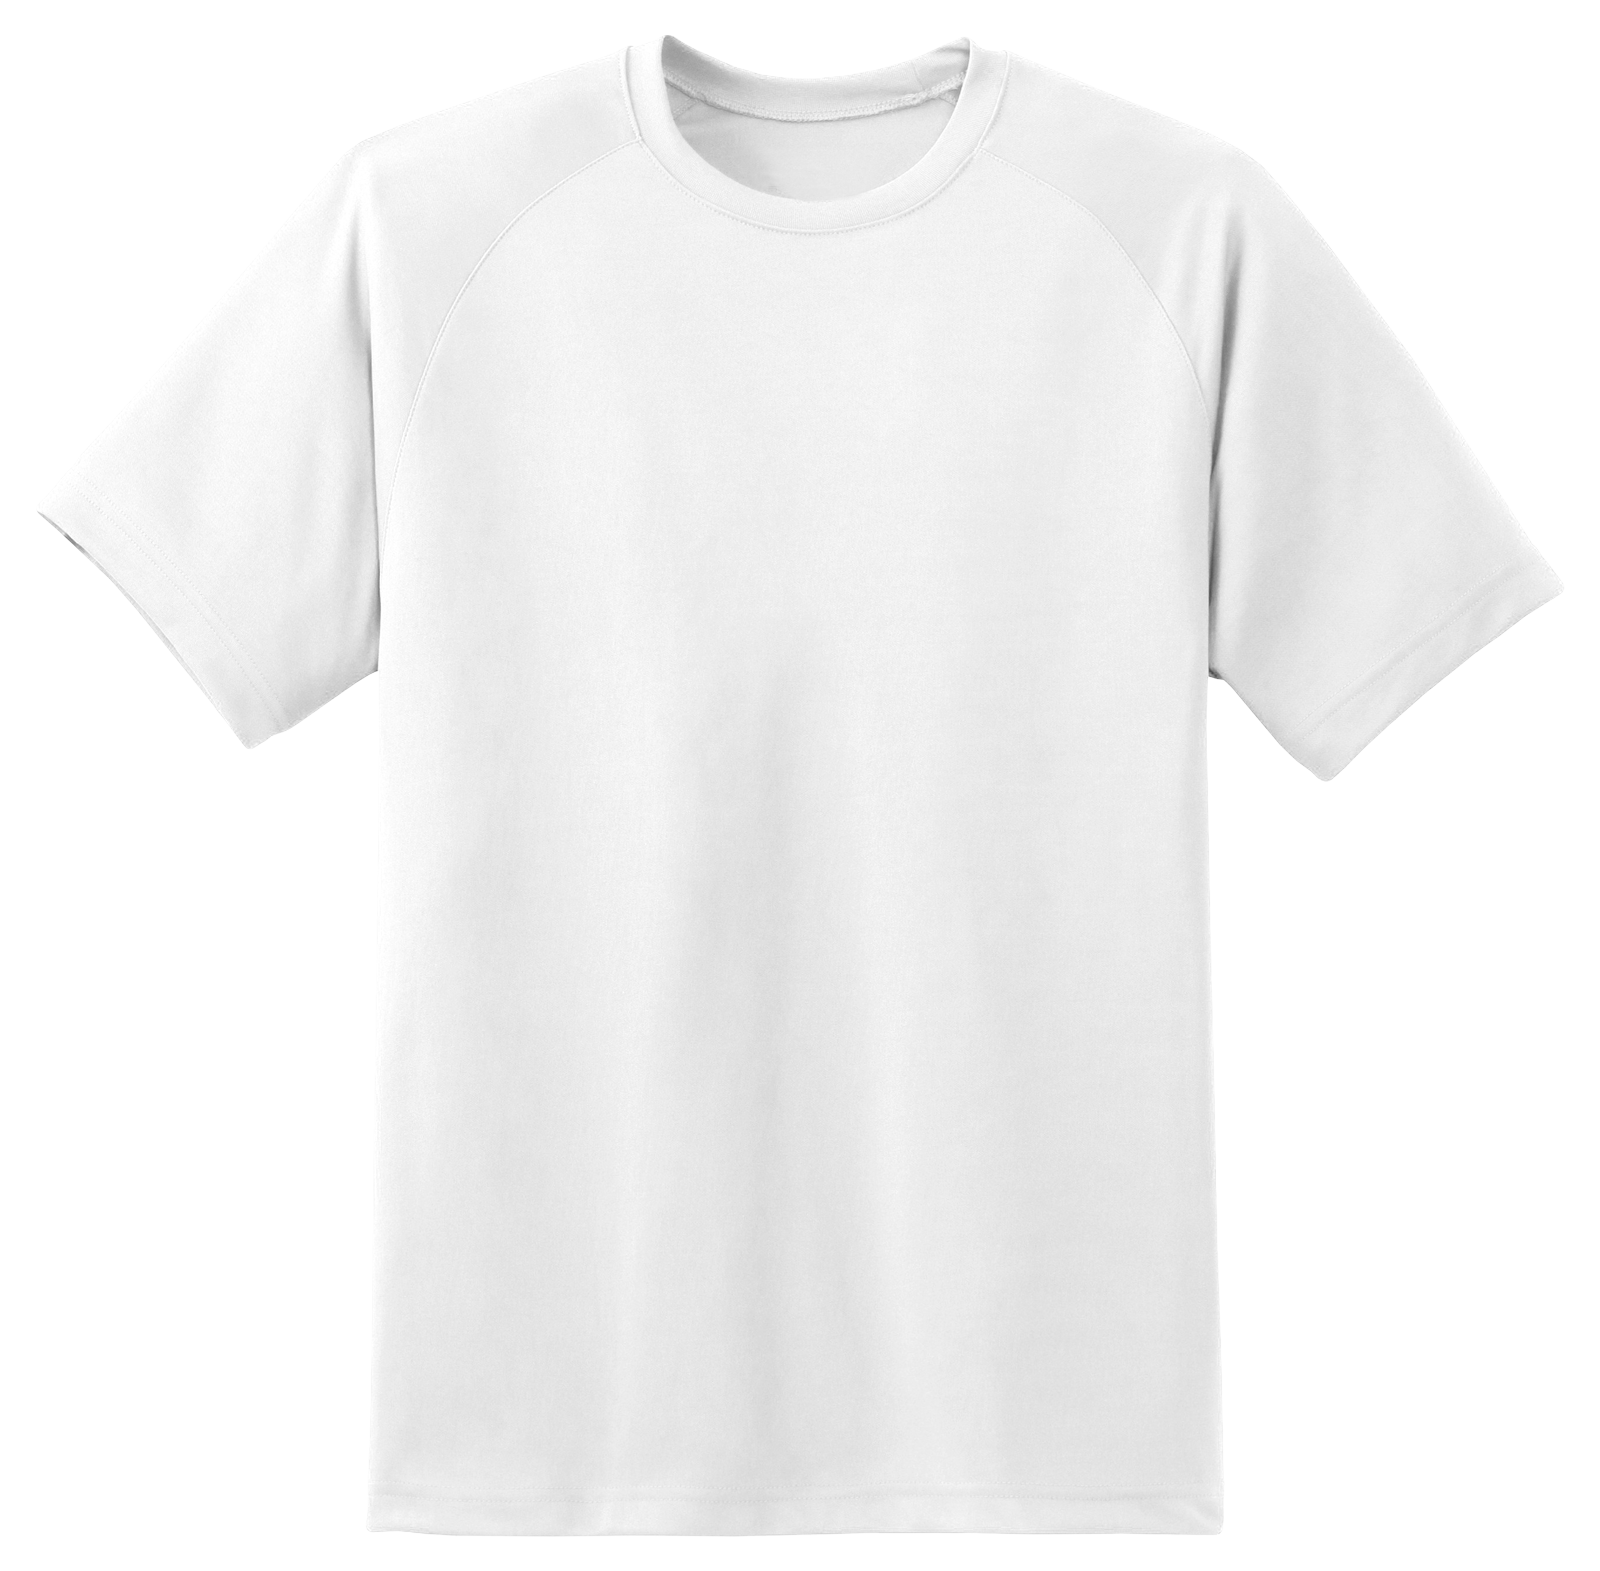 White T Shirt PNG Image HD